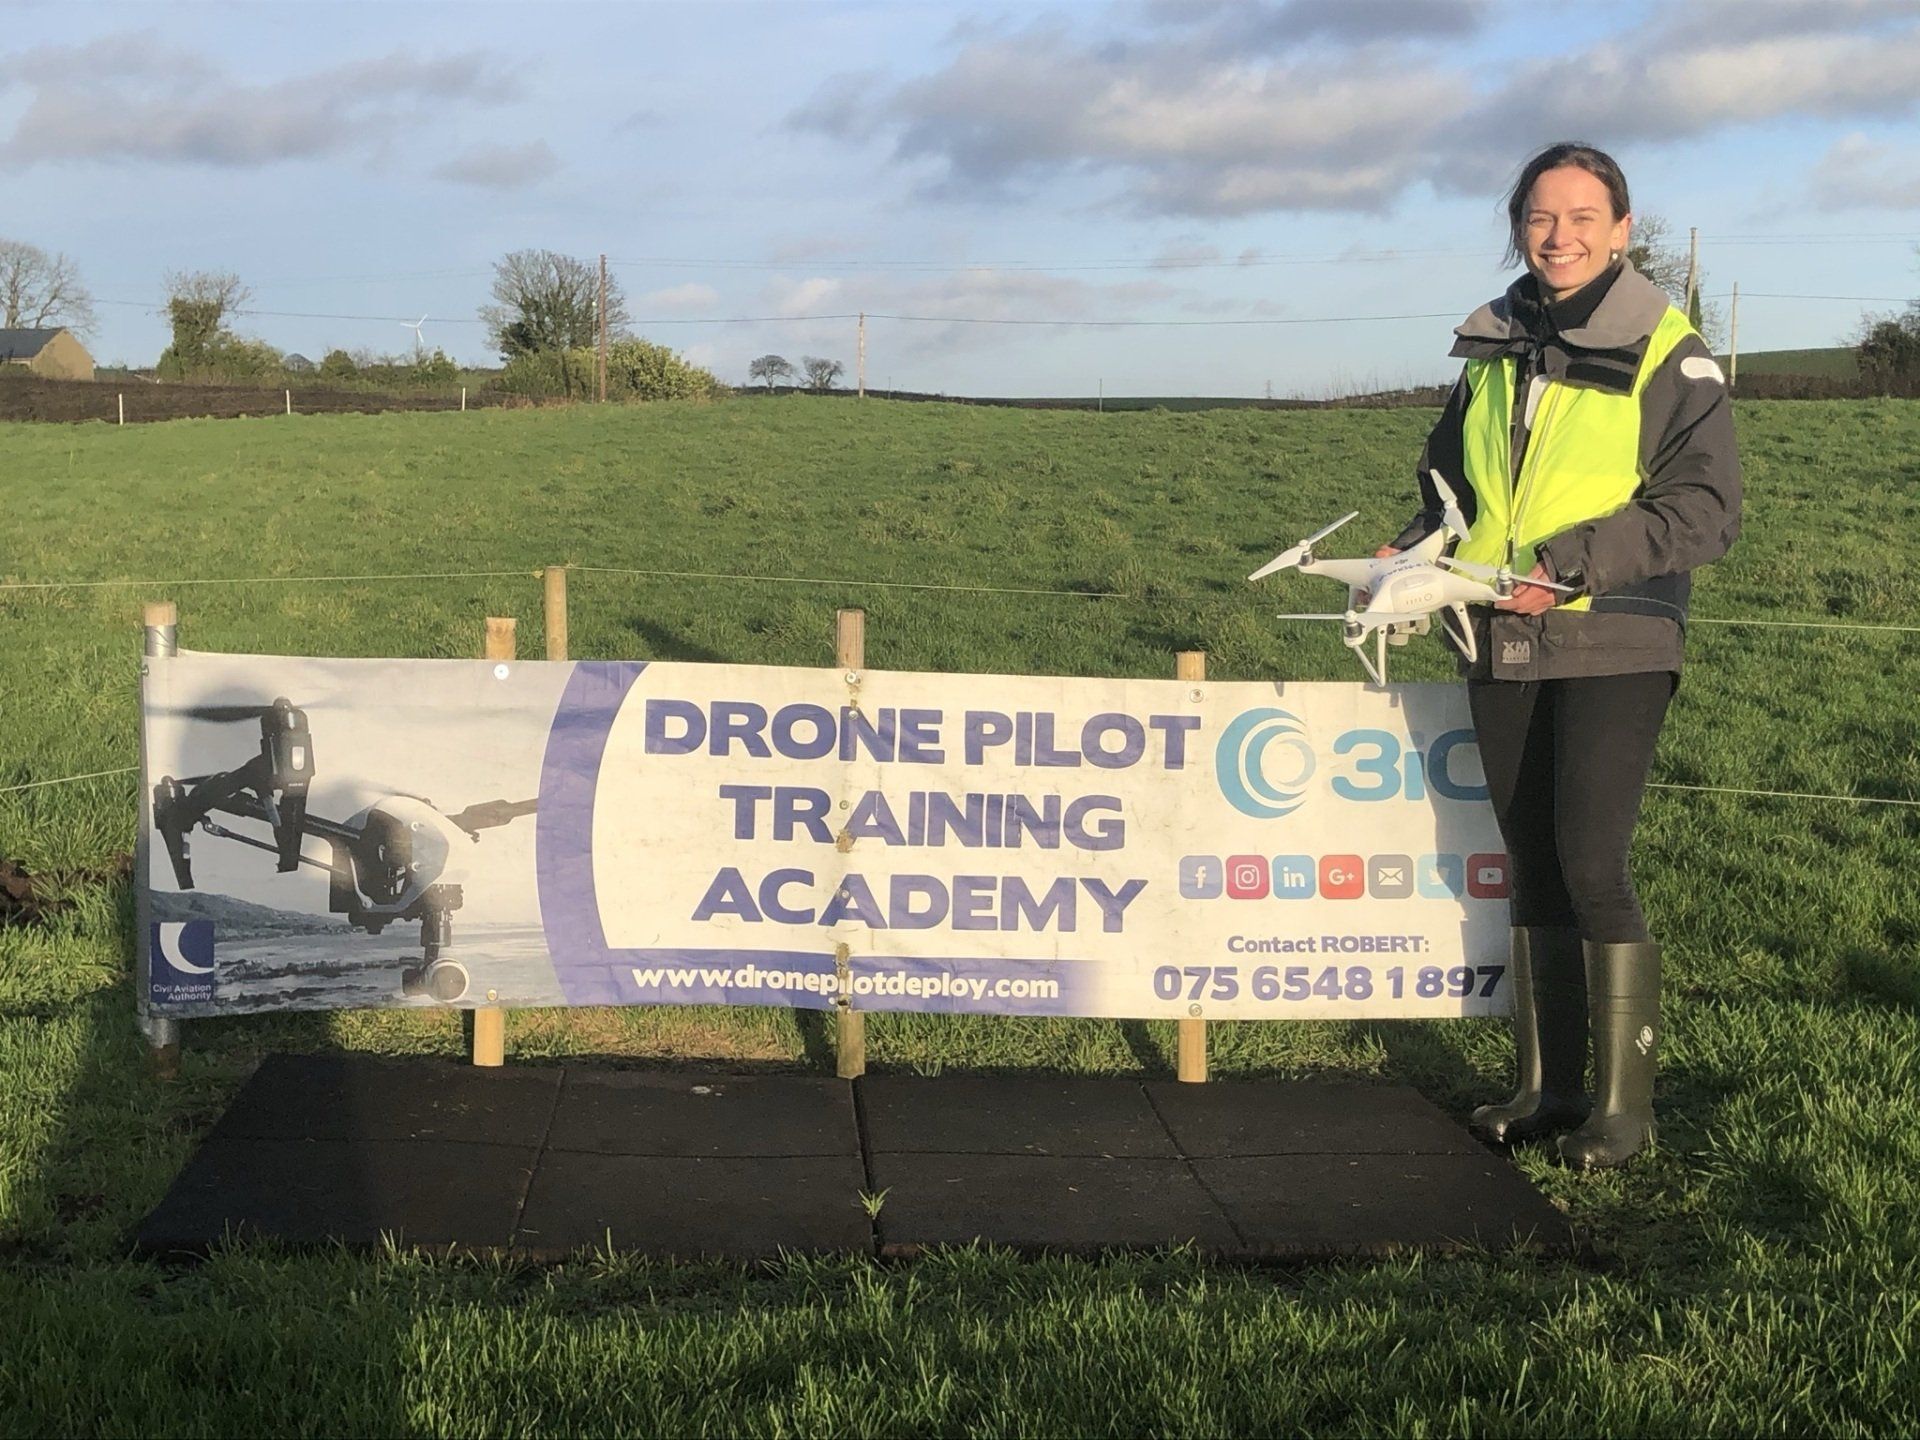 Drone Pilot Training Academy Belfast - Number 1 for GVC Drone Pilot Training in Northern Ireland